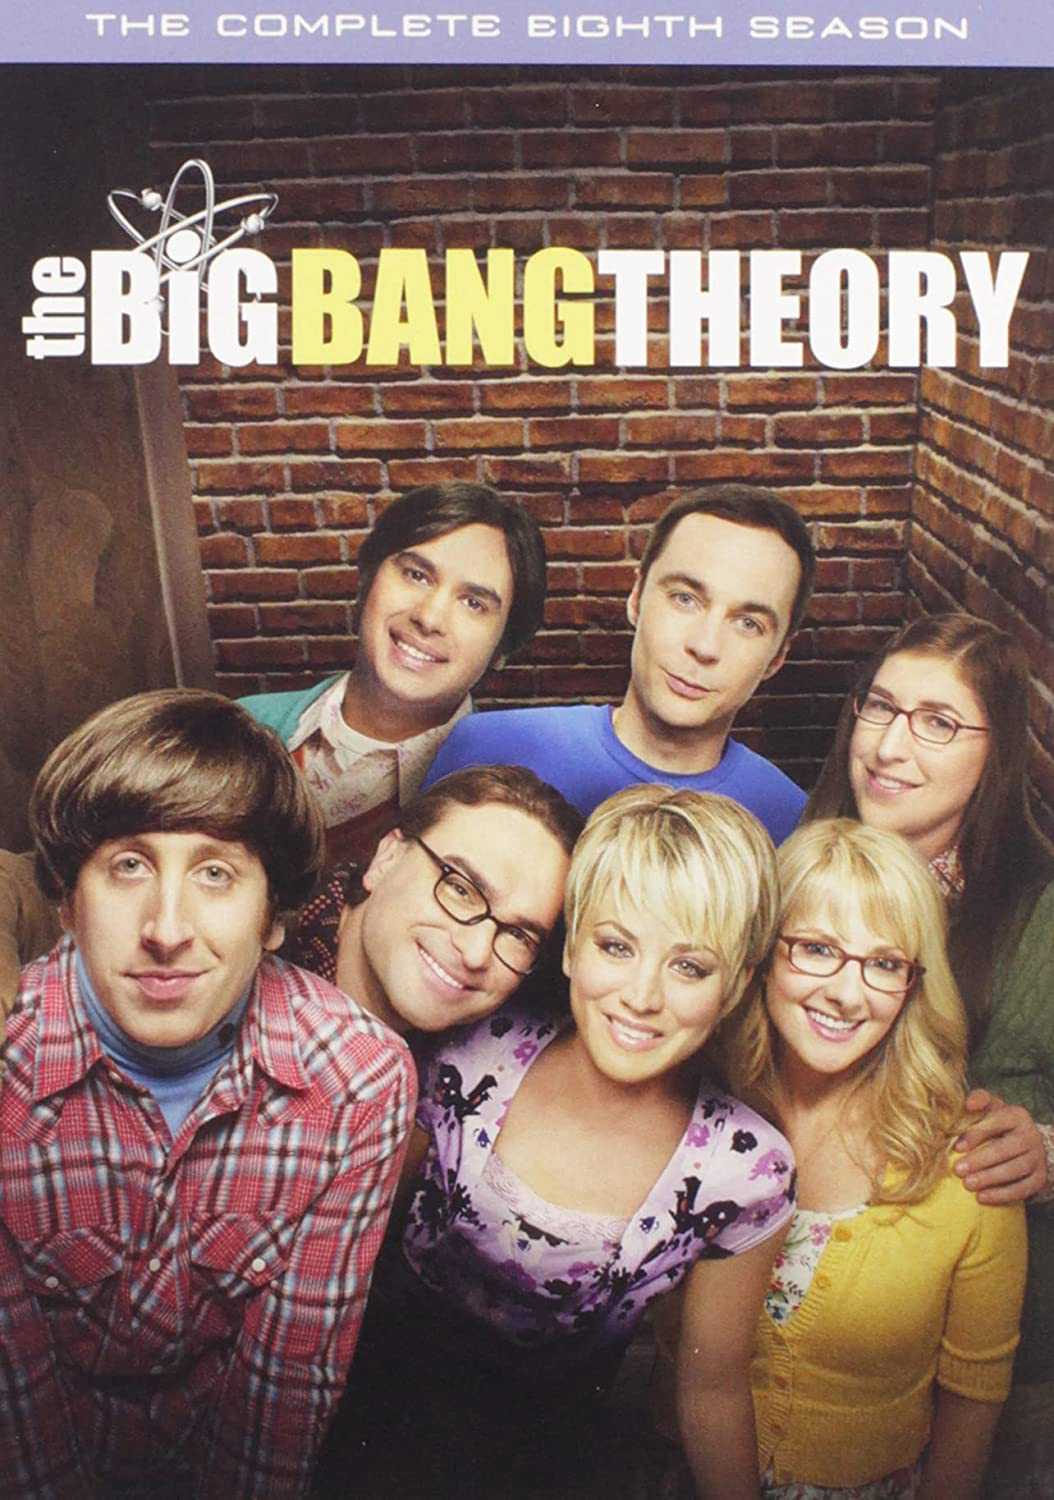 Vụ nổ lớn (phần 8) - The big bang theory (season 8)